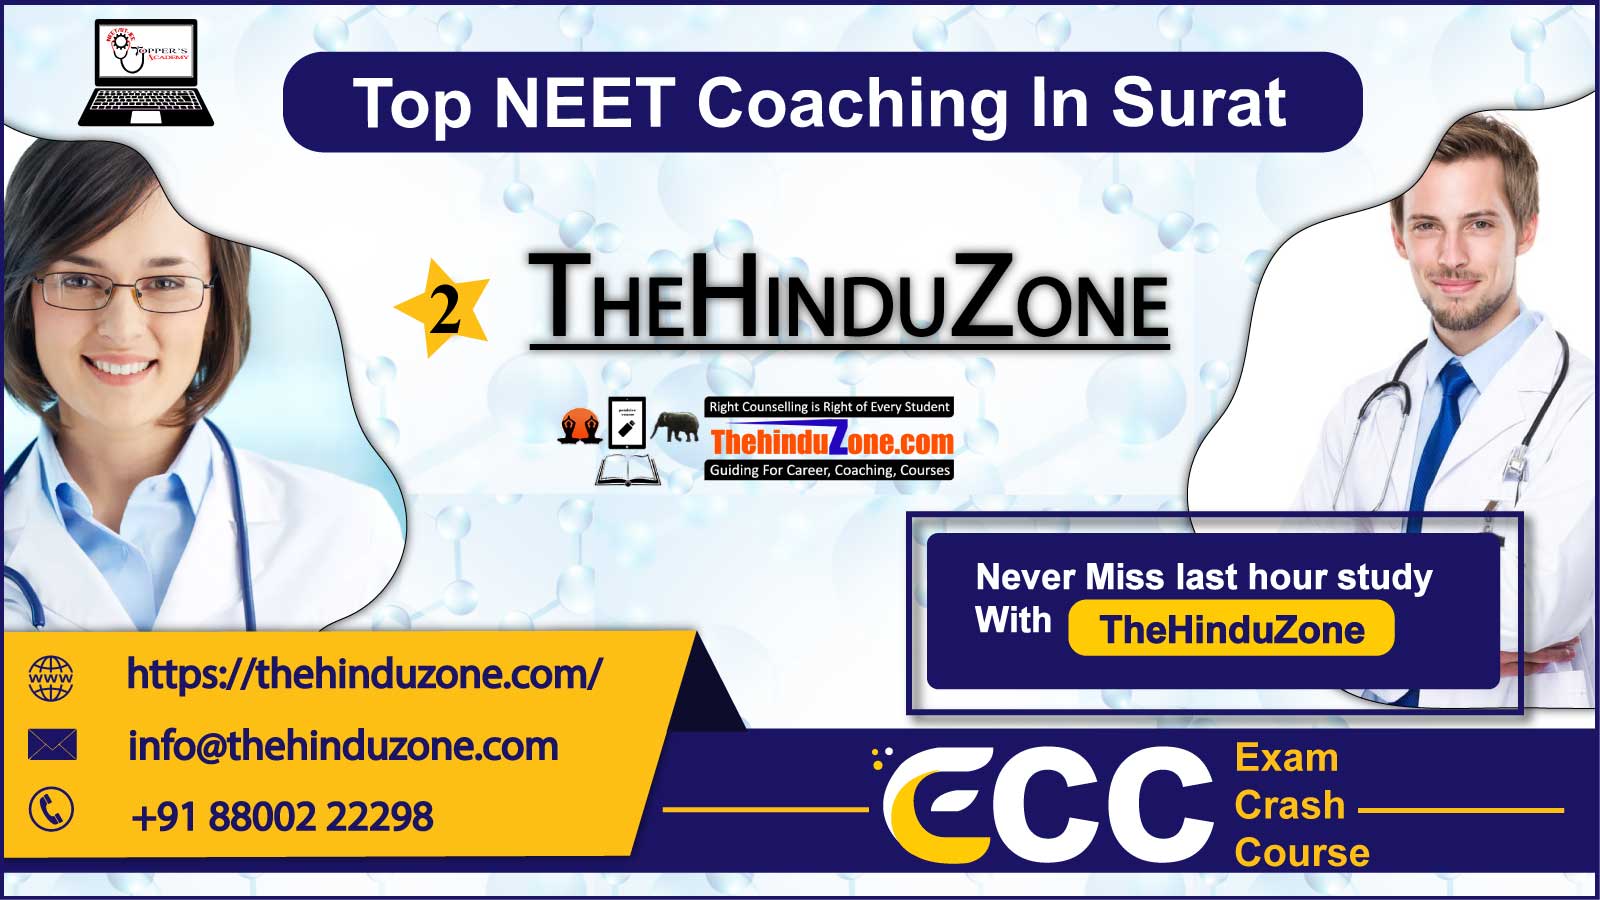 TheHinduzone NEET Coaching in Surat